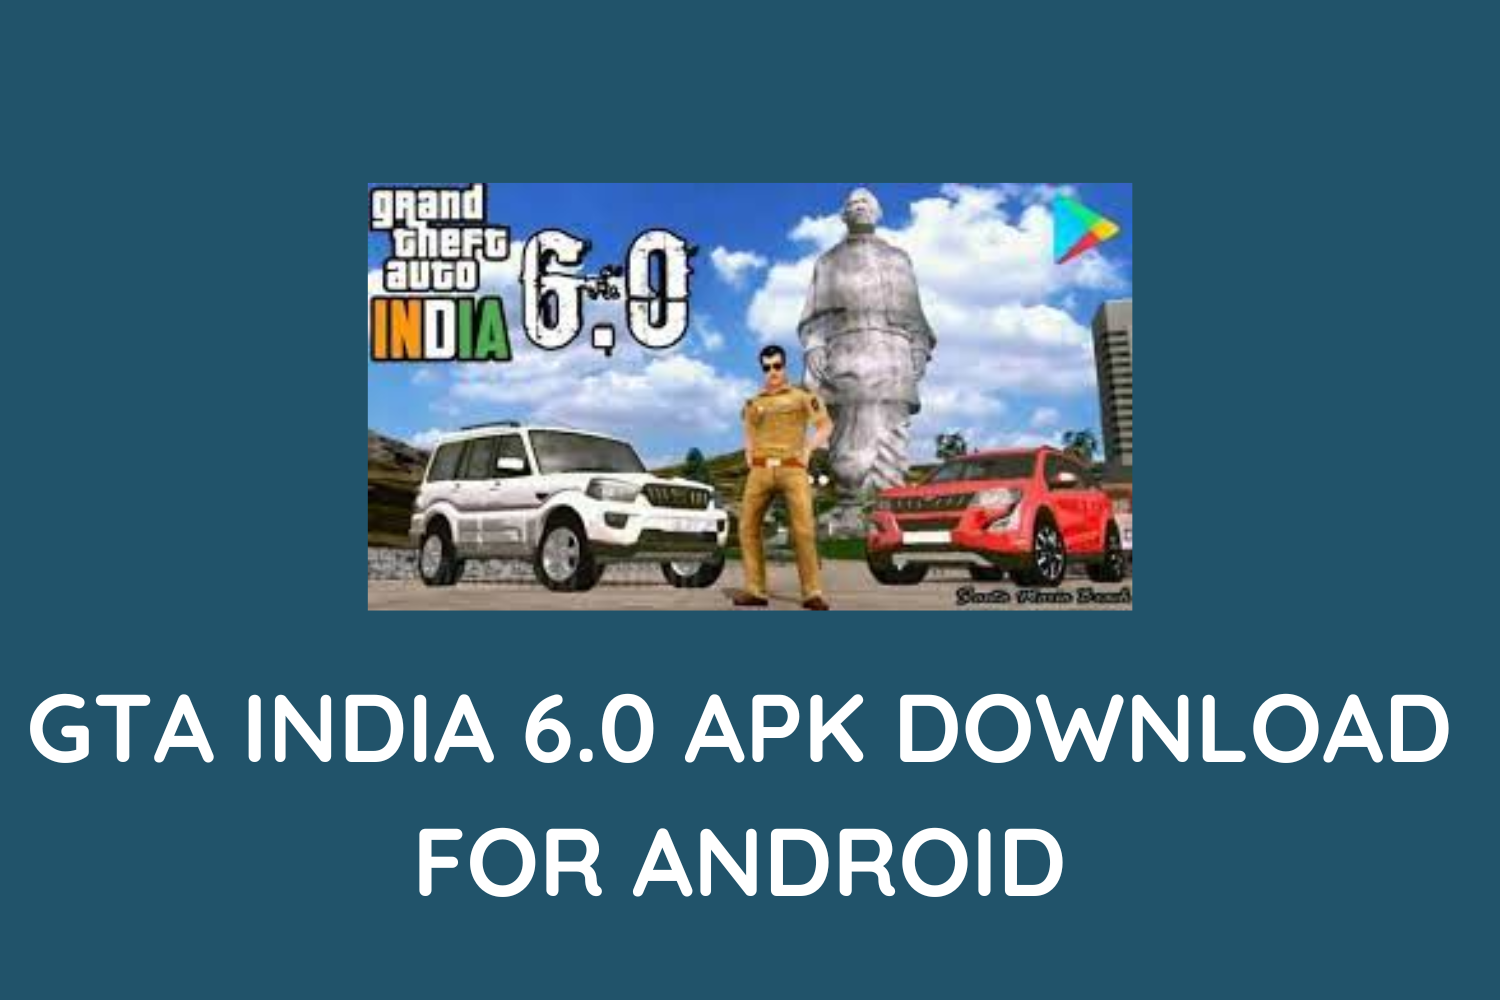 Gta India 6.0 Apk